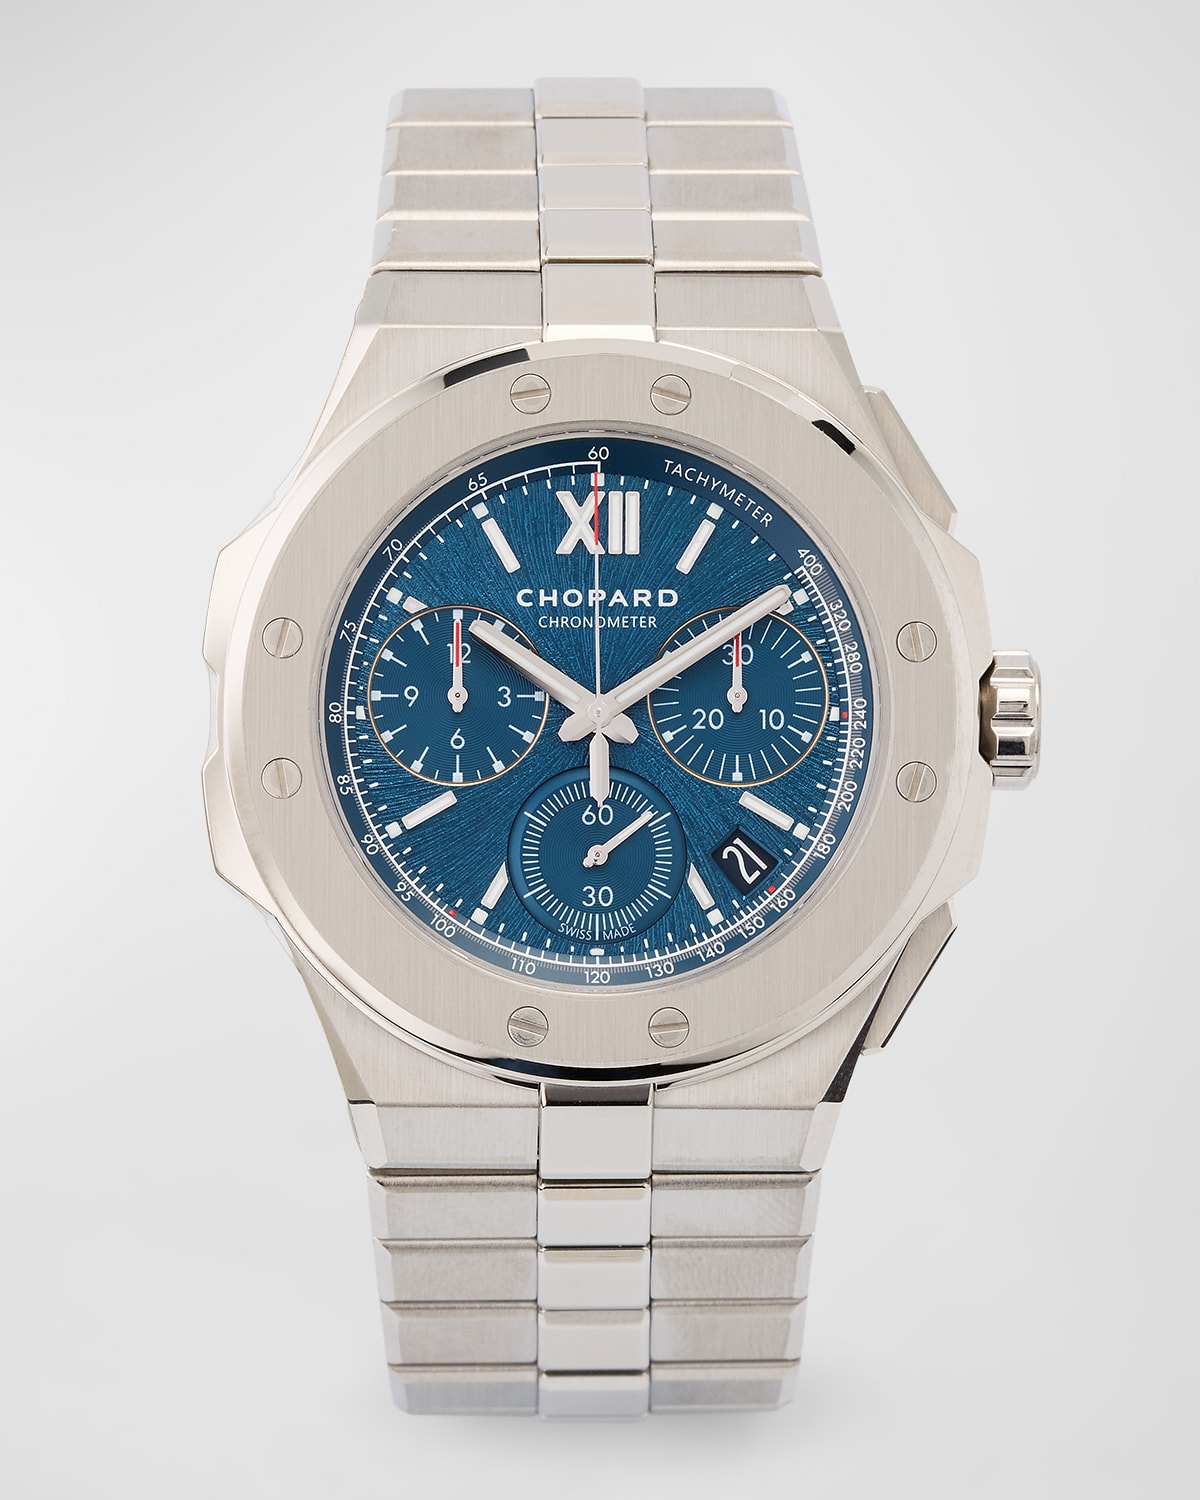 Chopard Alpine Eagle Xl Chrono Automatic 44mm Lucent Steel Watch, Ref. No. 298609-3001 In Blue